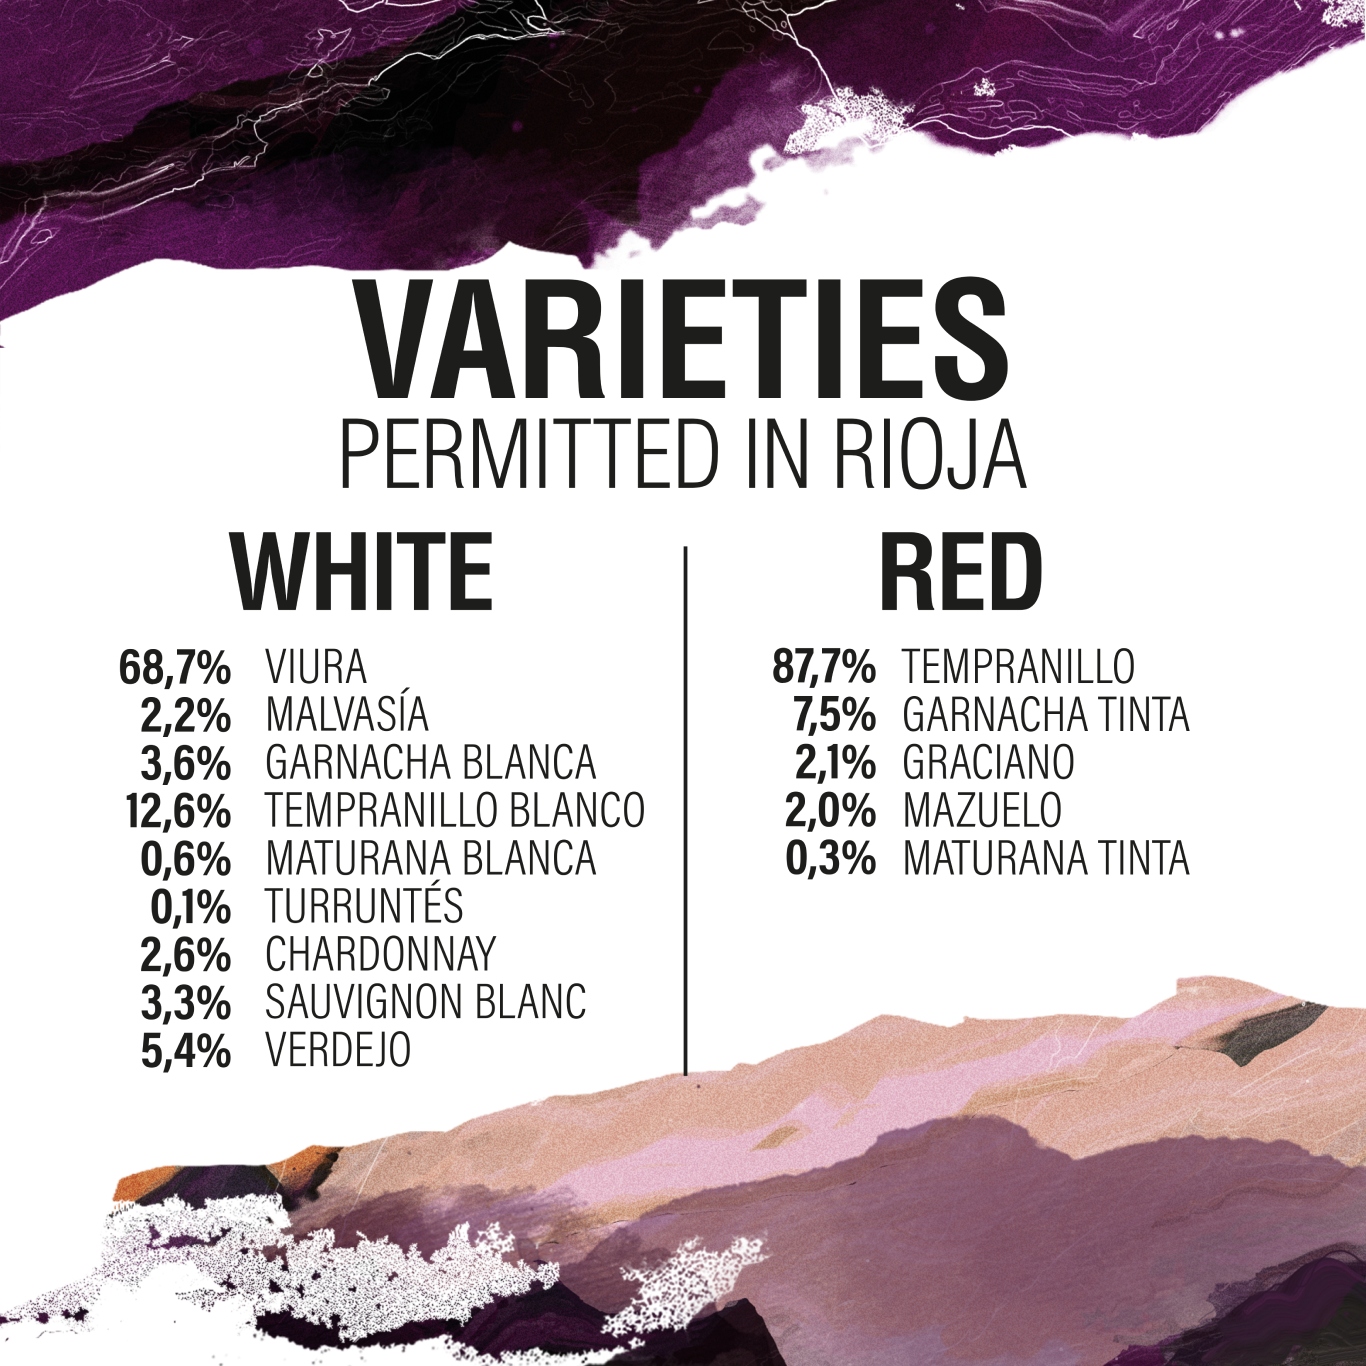 Spanish grape varieties found in Rioja wine region